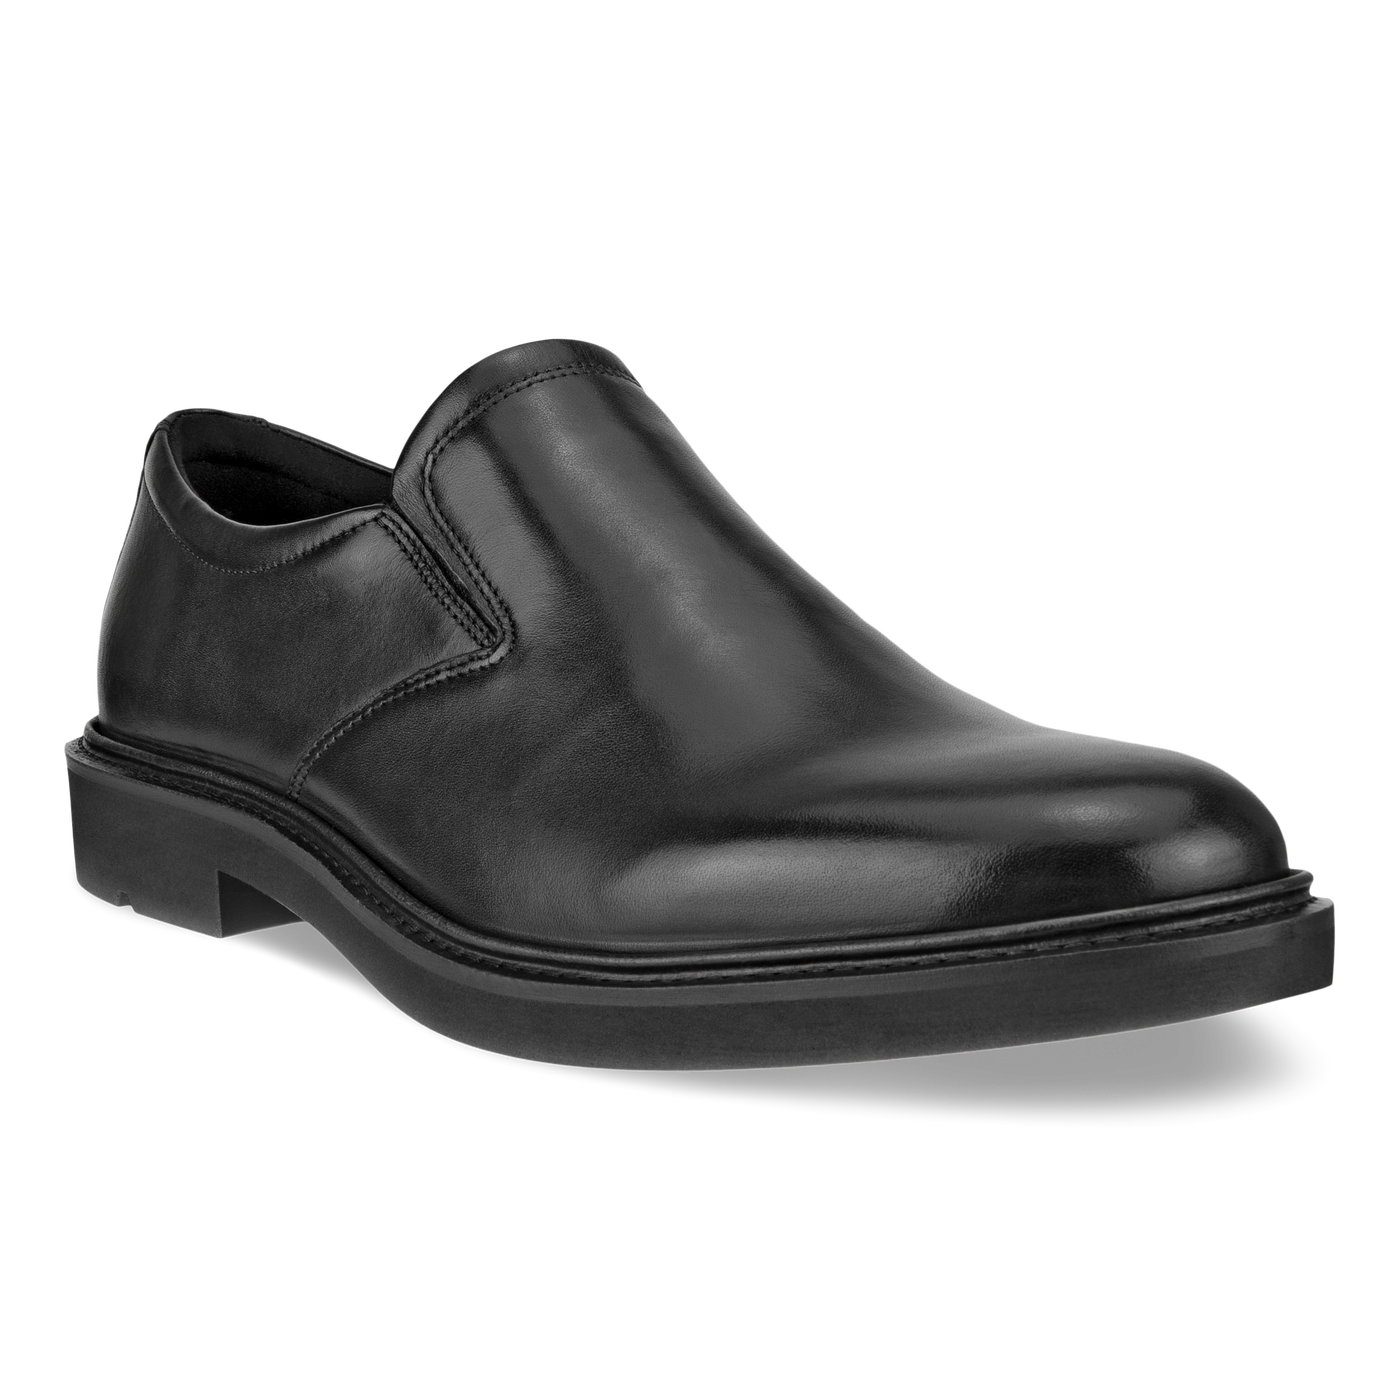 ECCO Men's Metropole London Slip-On Dress Shoes Black